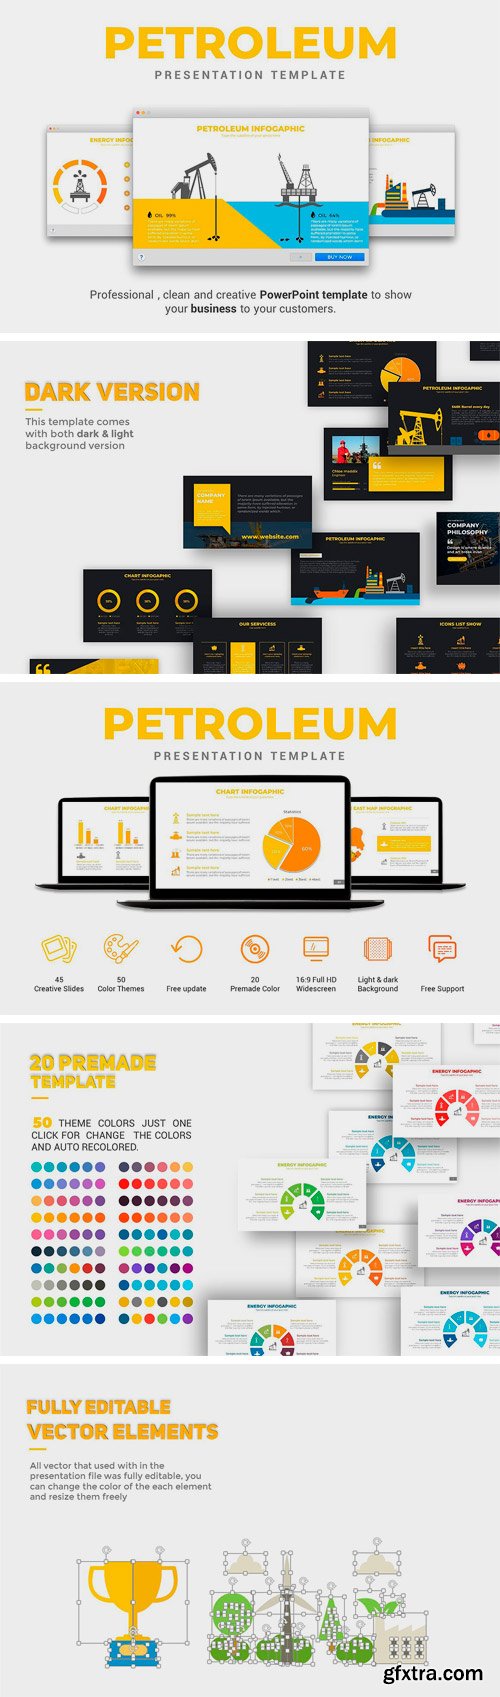 CM - Petroleum PowerPoint Template 2272153